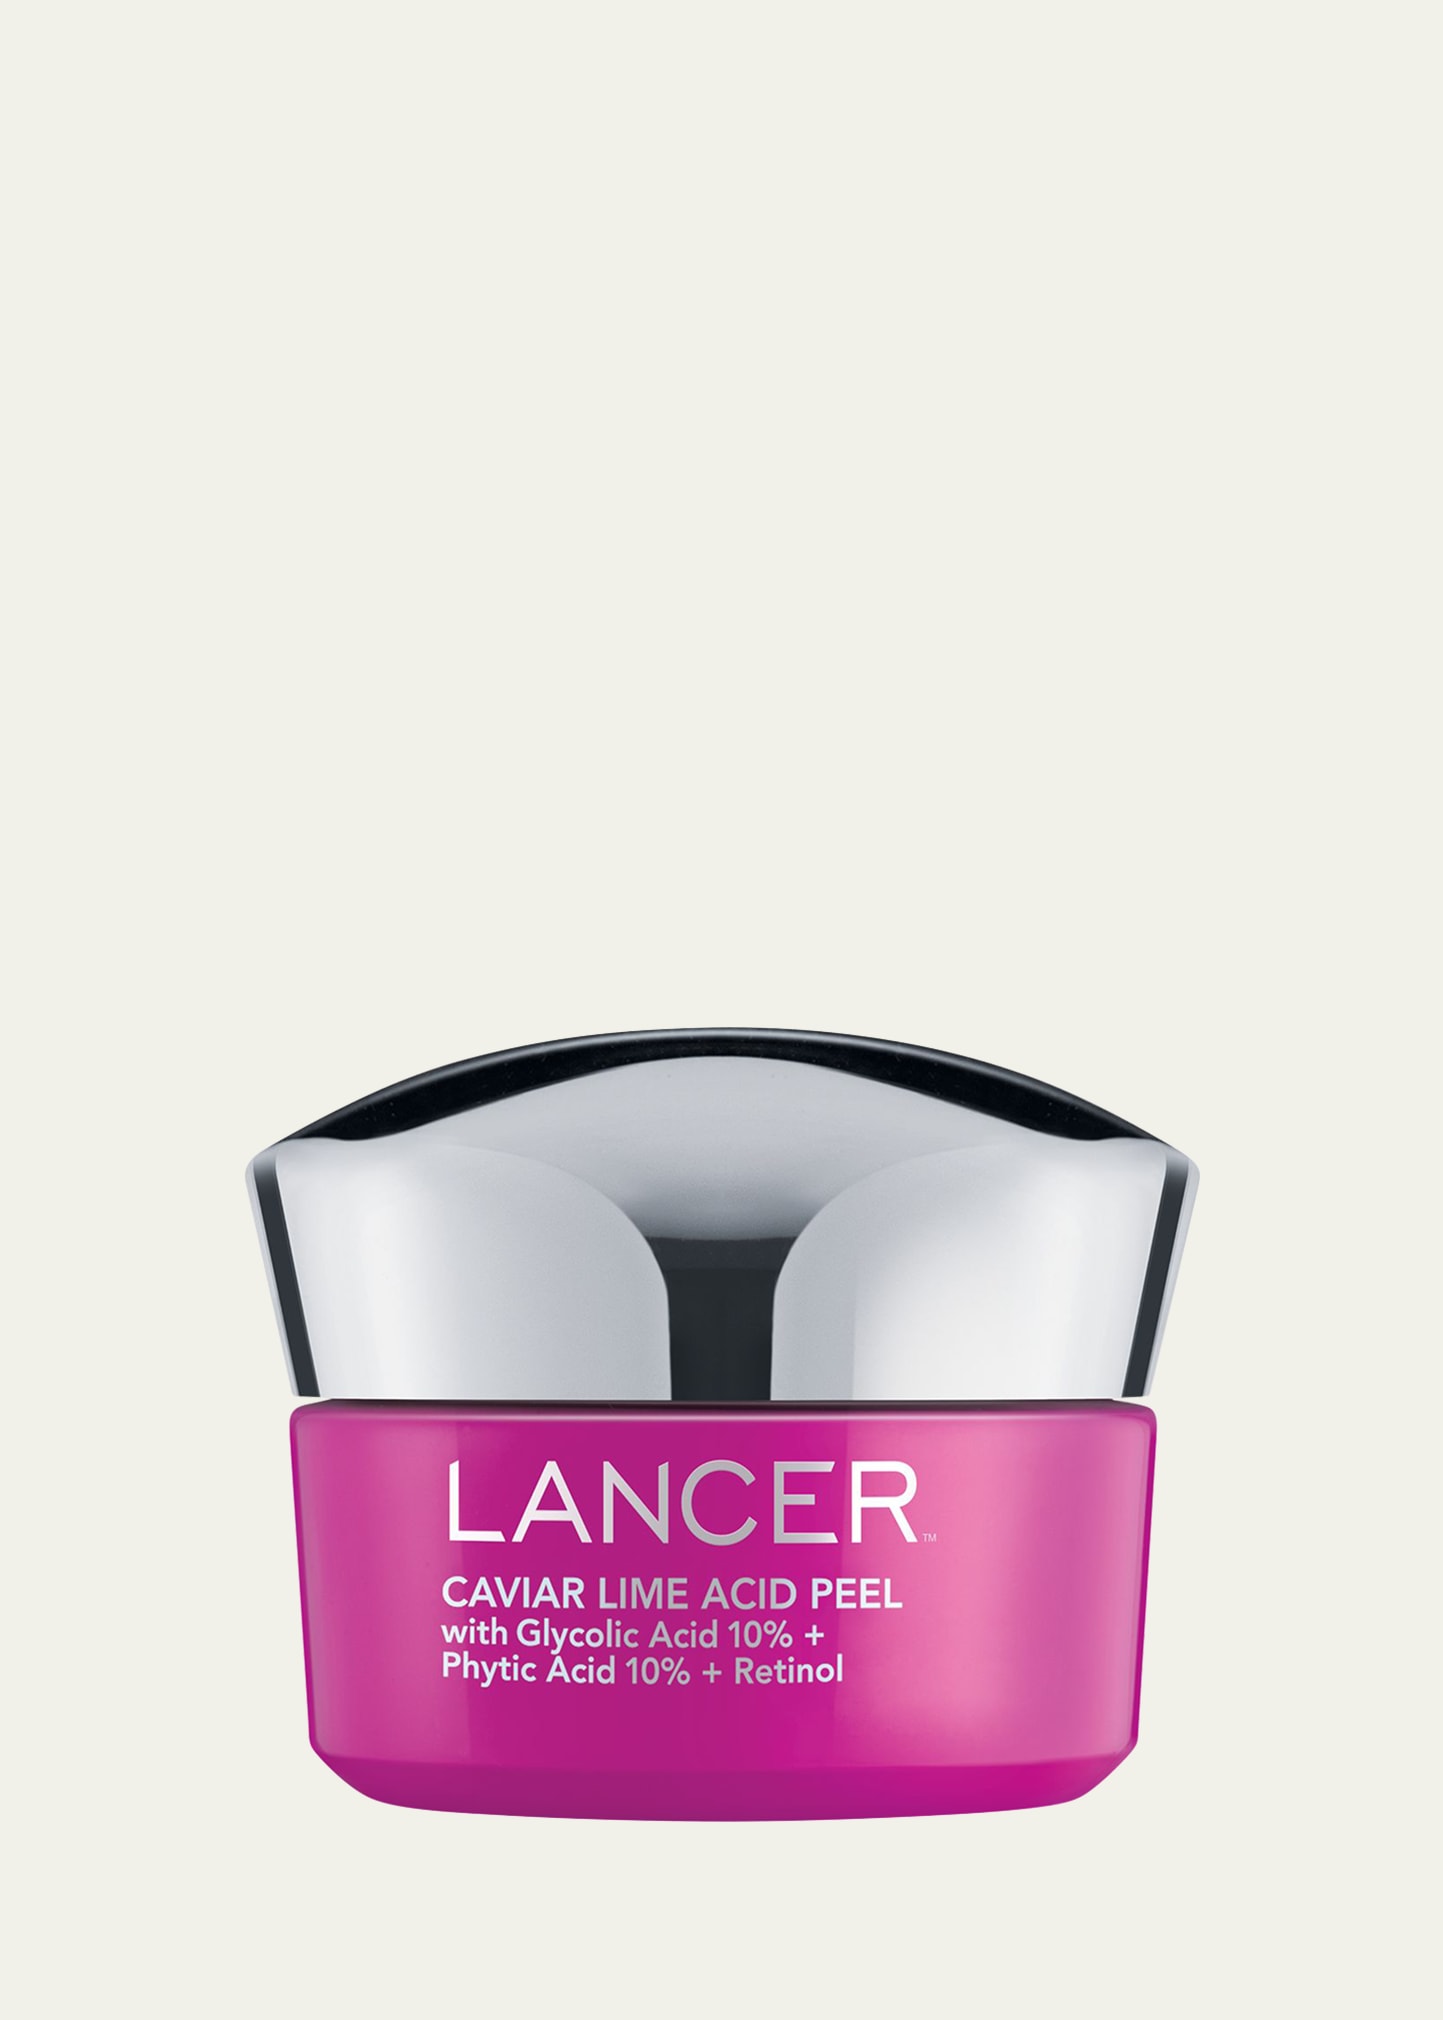 Lancer Caviar Lime Acid Peel, 1.7 oz./ 50 mL